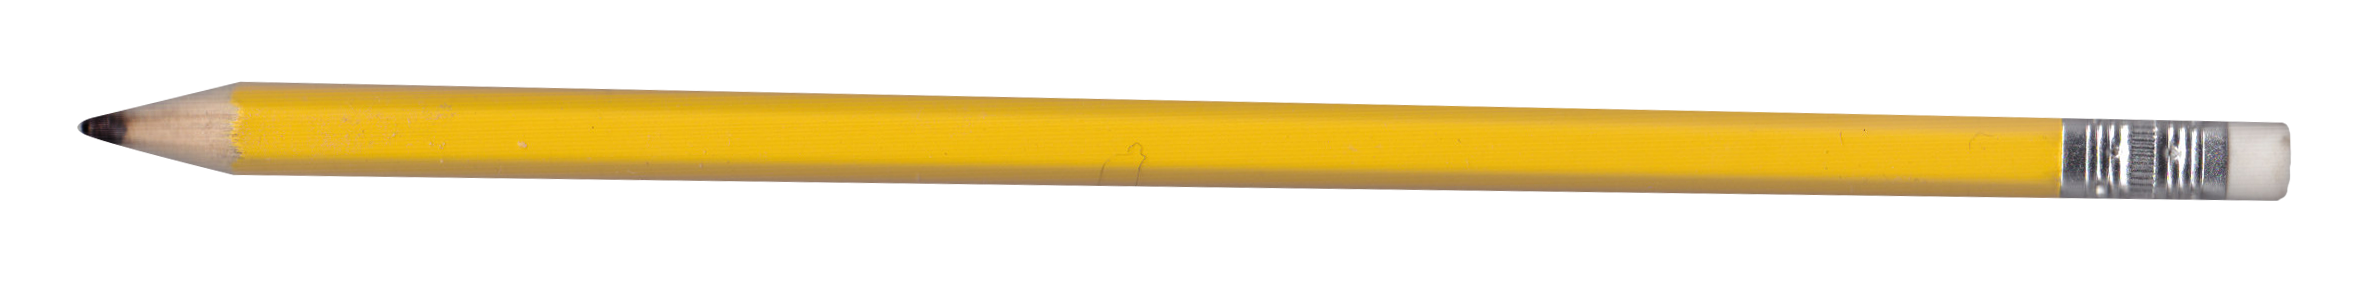 Yellow Pencil Transparent Background SVG Clip arts